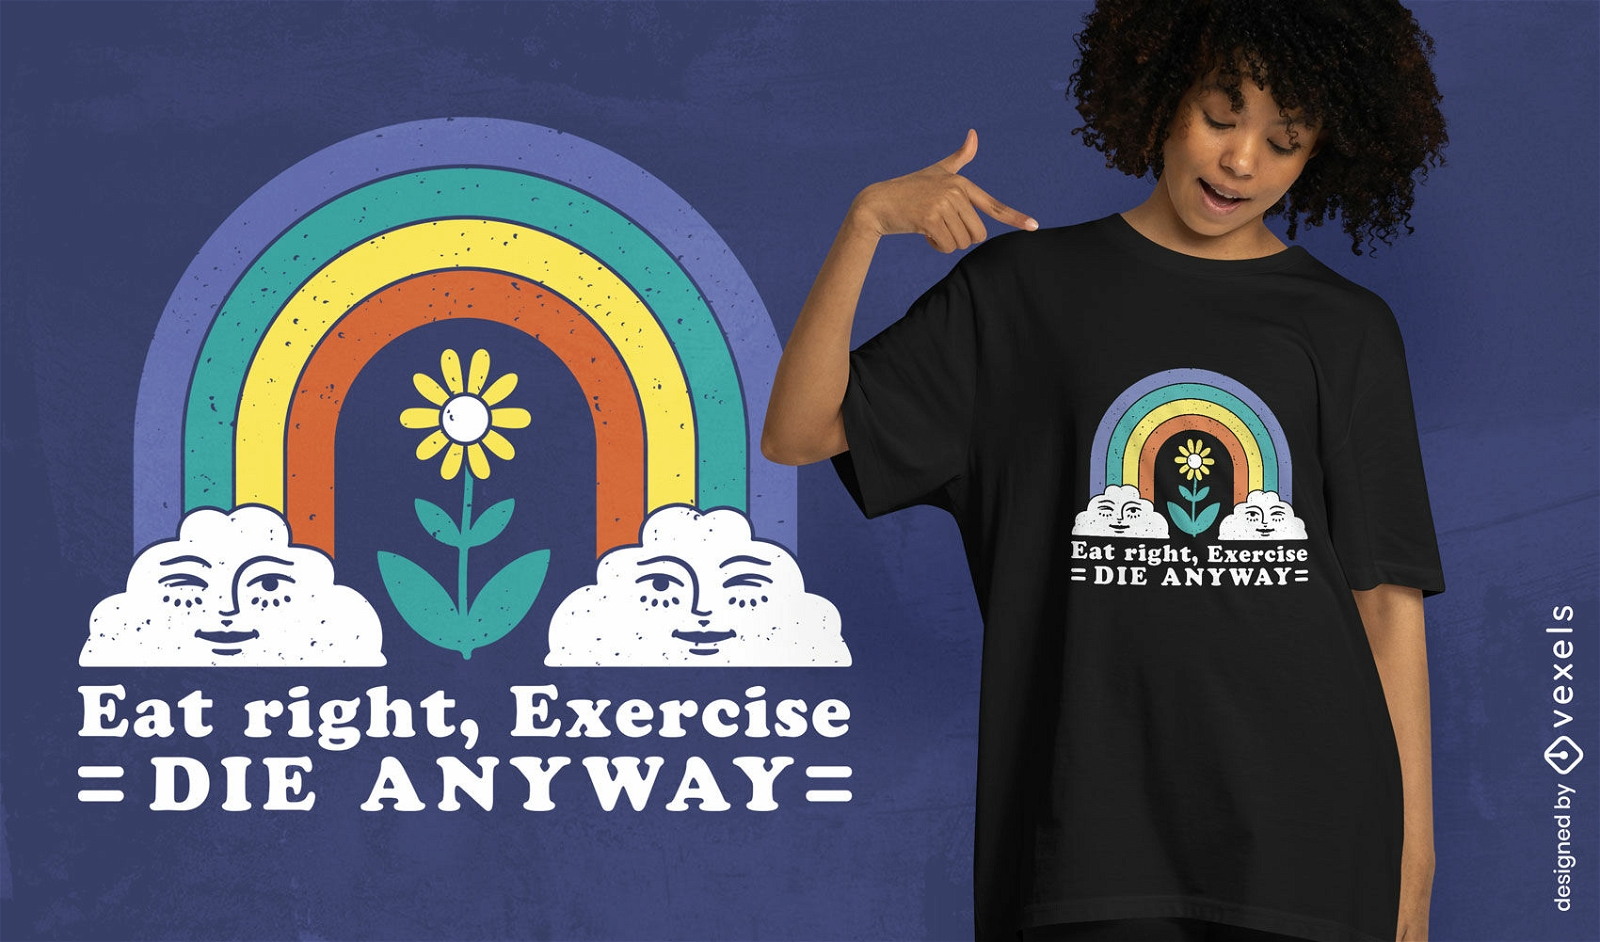 Coma el dise?o de camiseta arco?ris de ejercicio correcto.